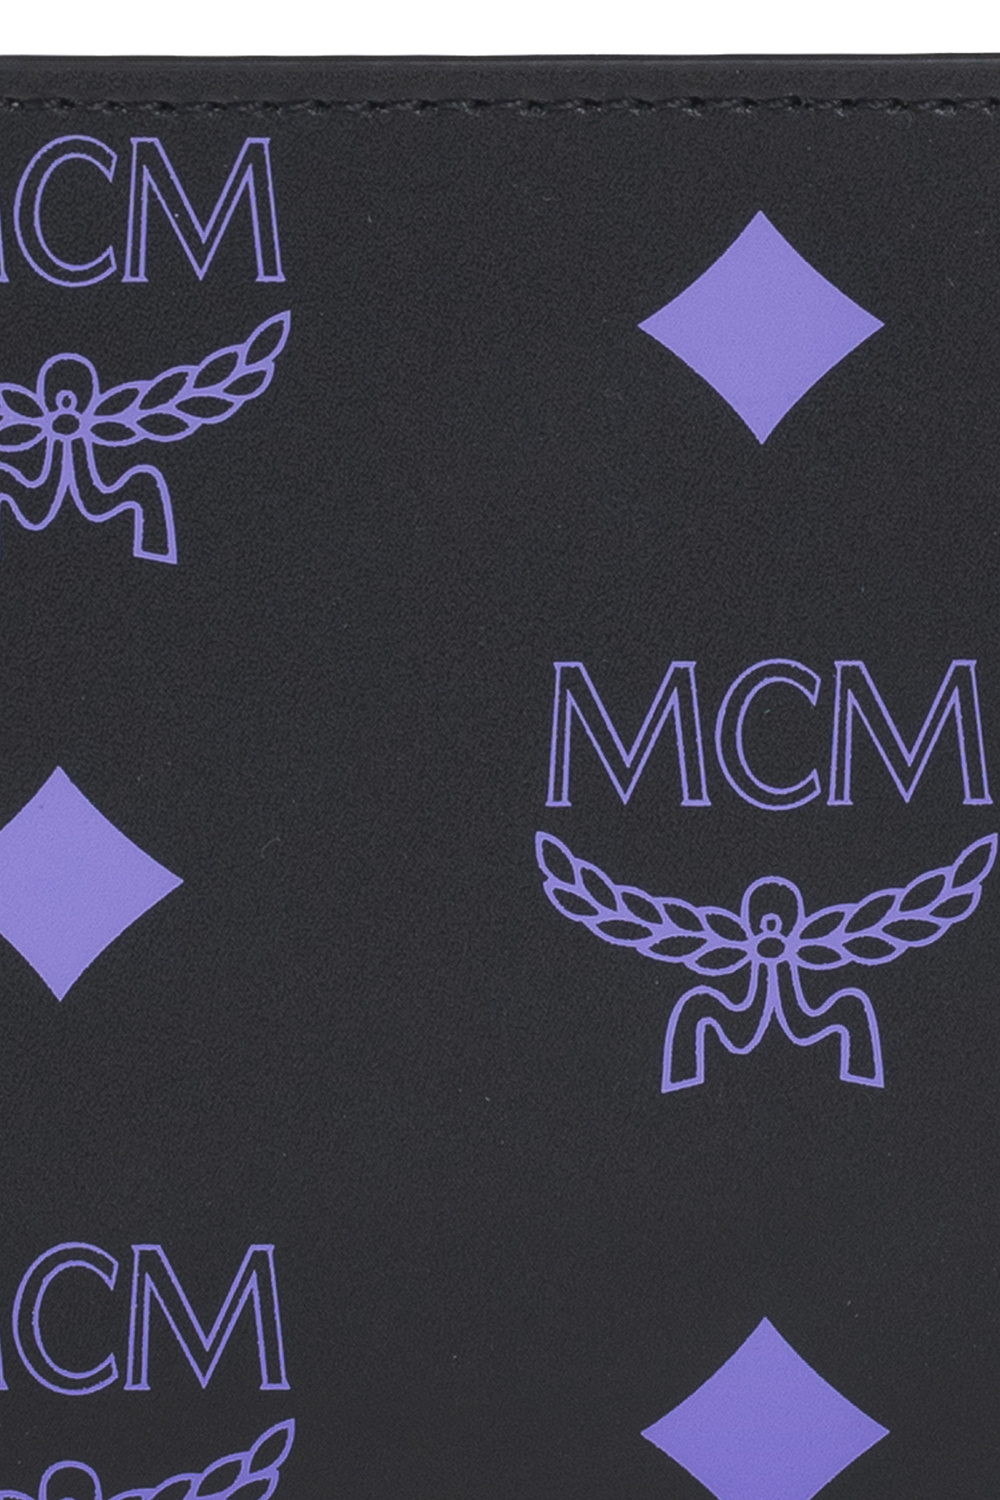 MCM Concept 13 Restaurant